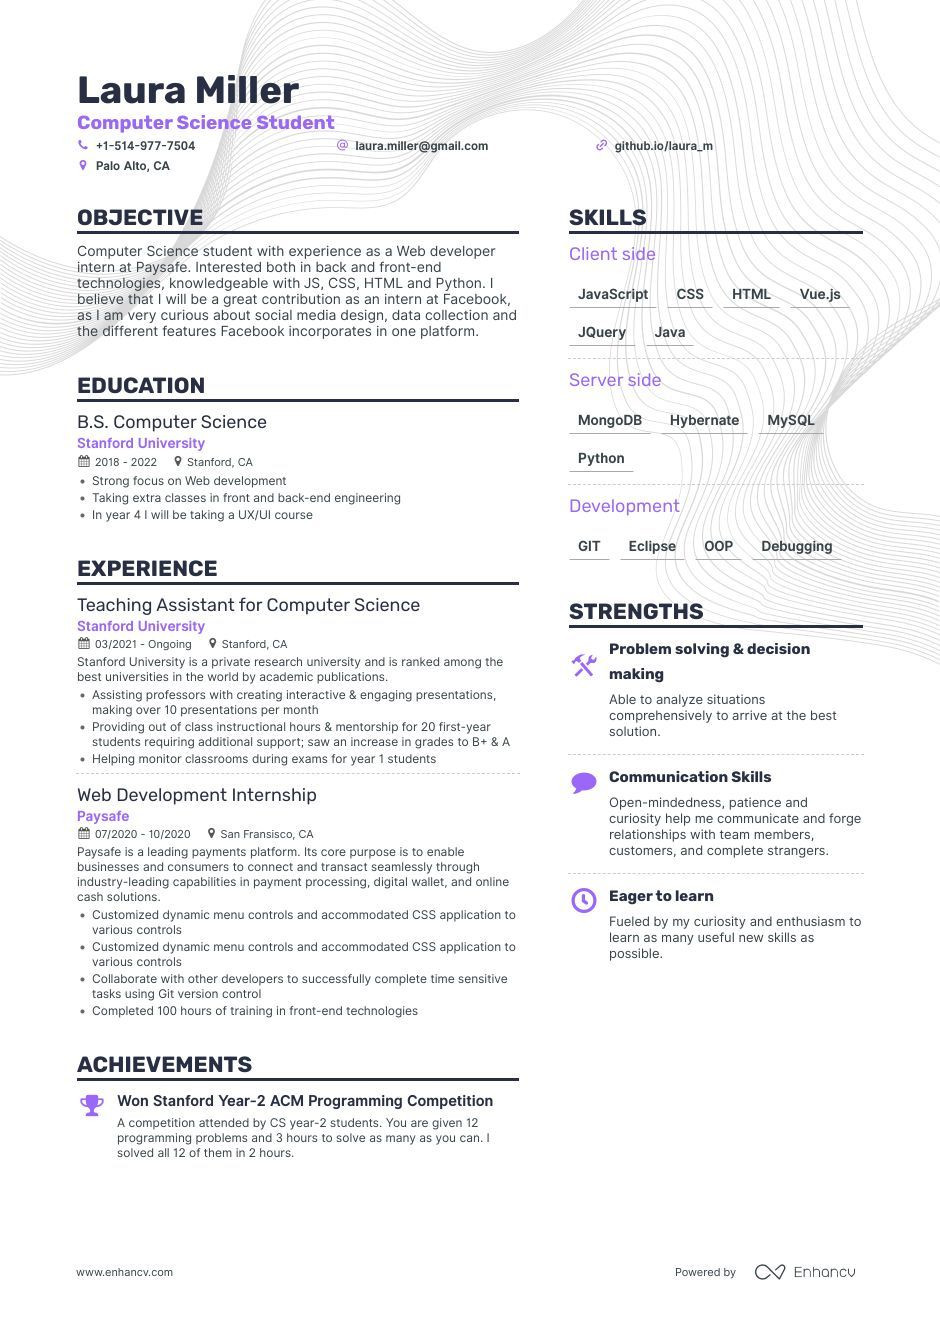 Recent Graduate Resume Computer Science Sample Computer Science Resume Examples & Guide for 2022 (layout, Skills …